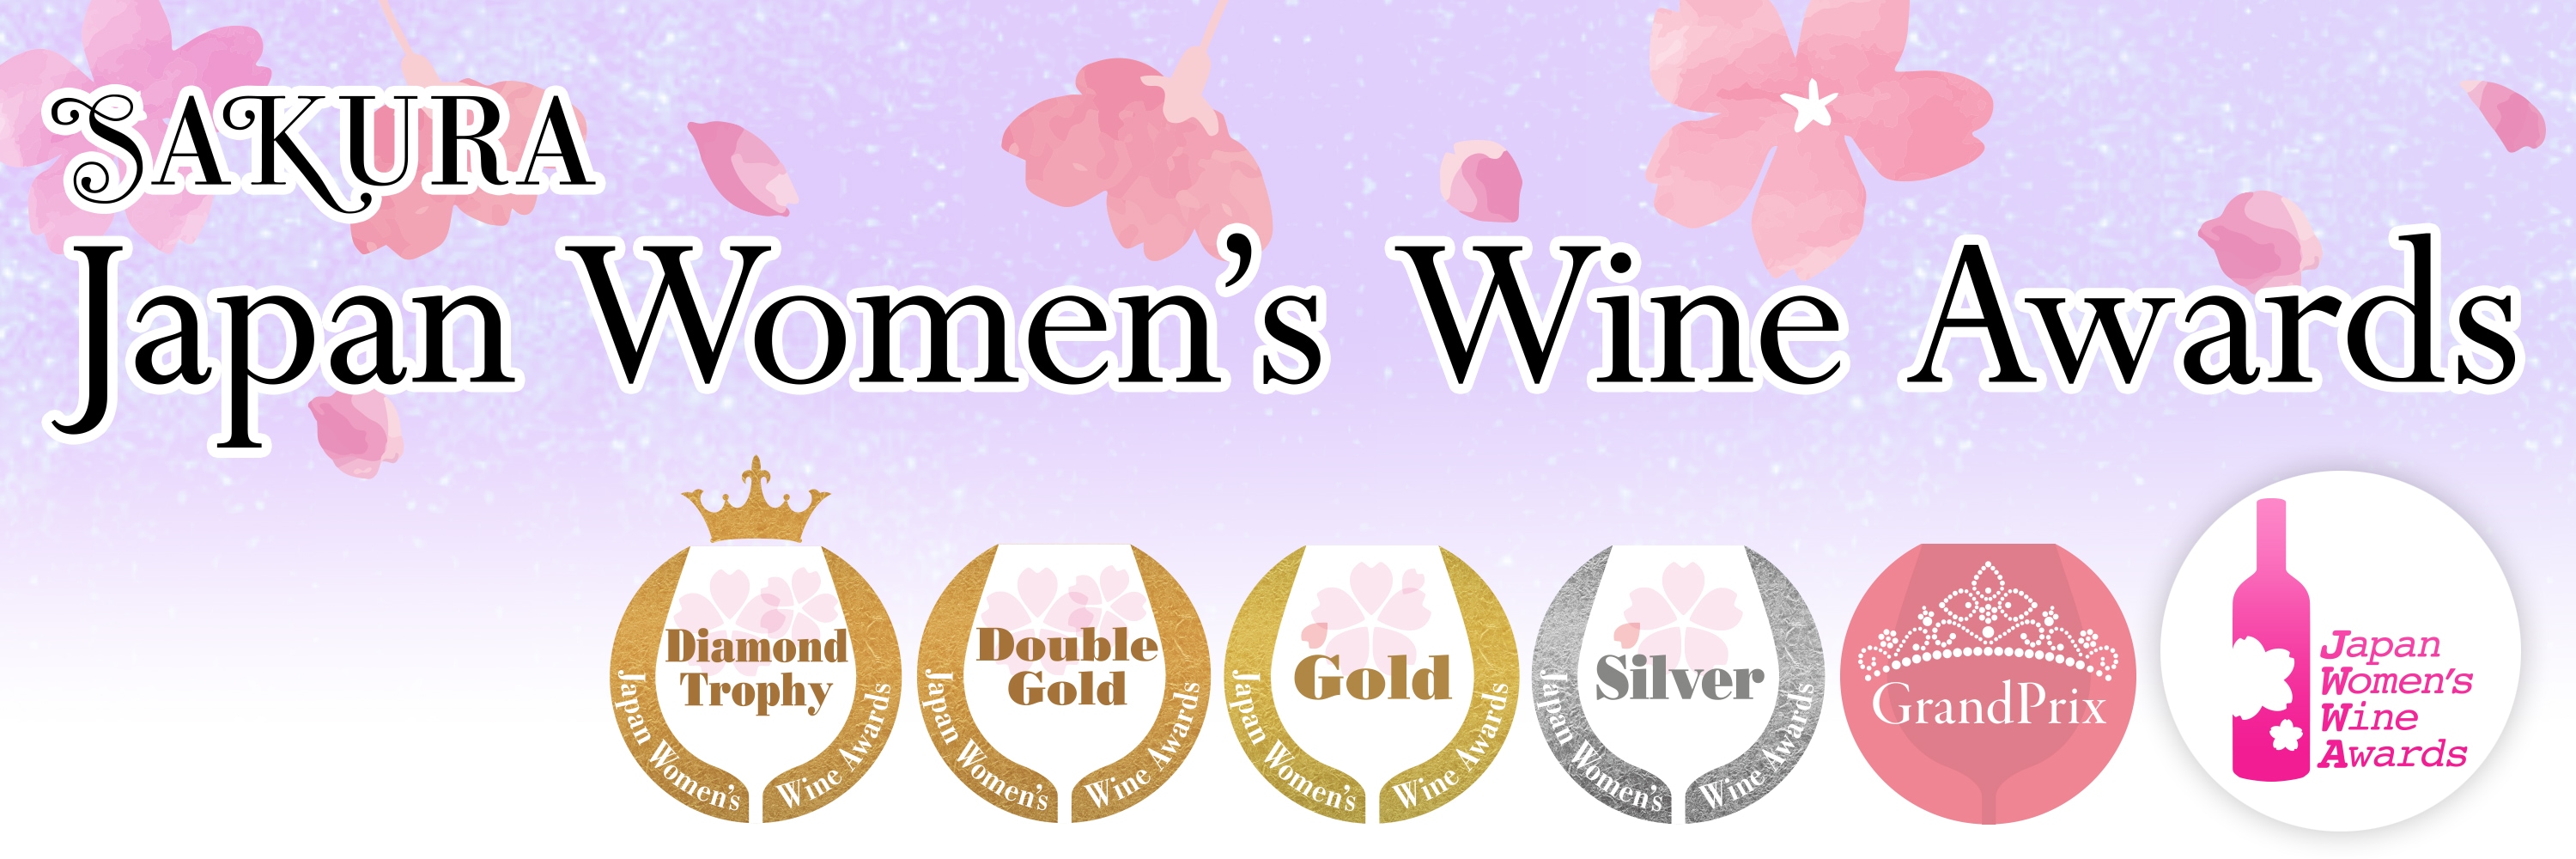 SAKURA Japan Women's Wine Awards